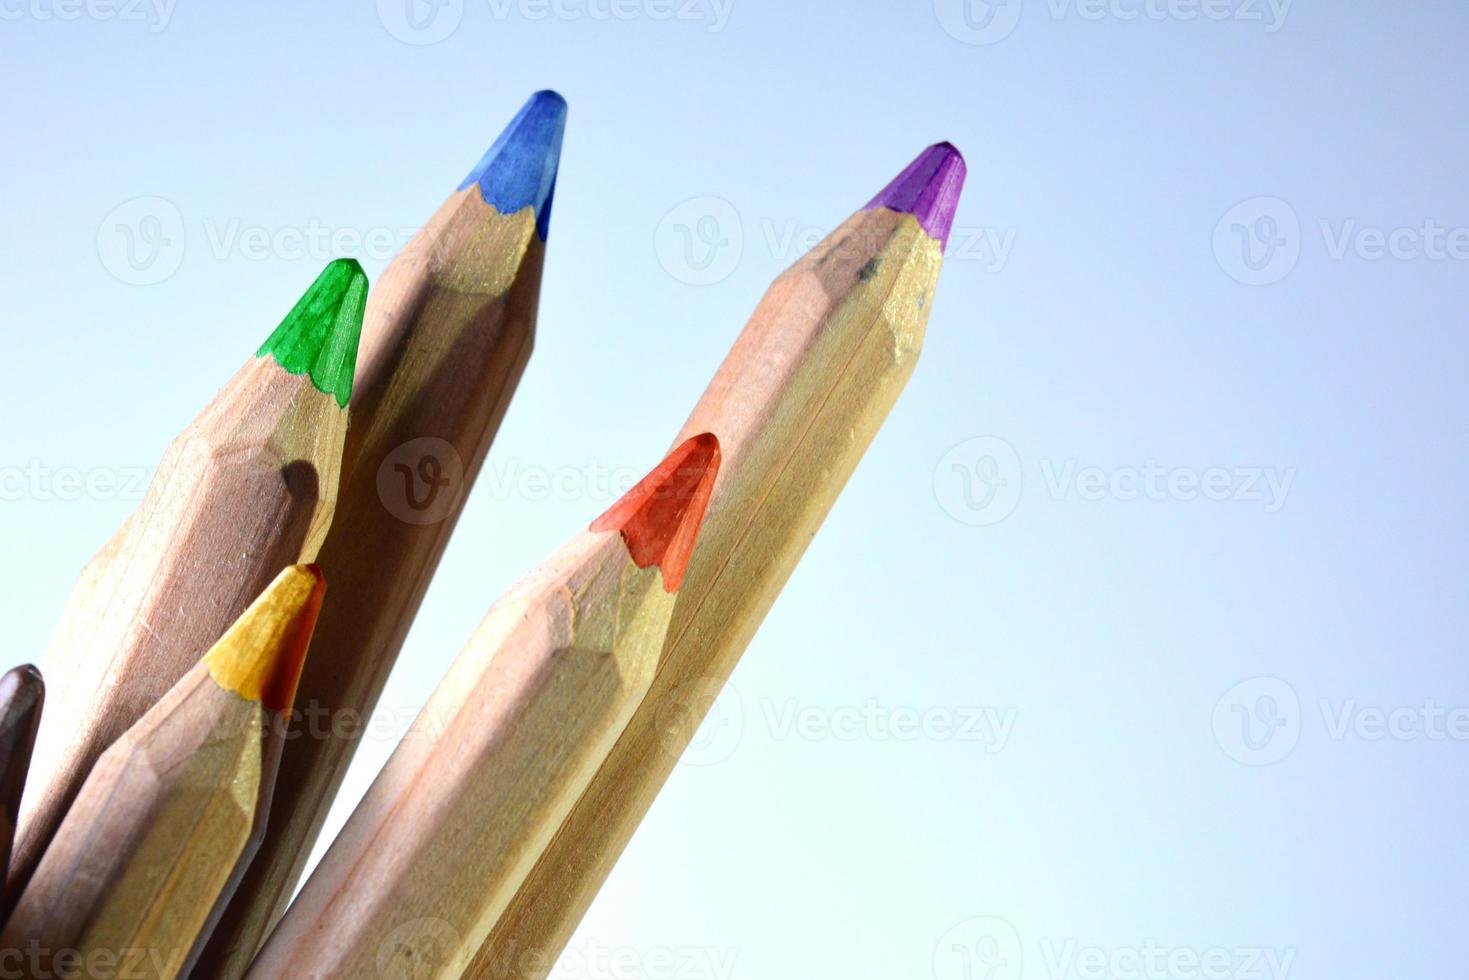 Wooden-color pencils in landscape view photo